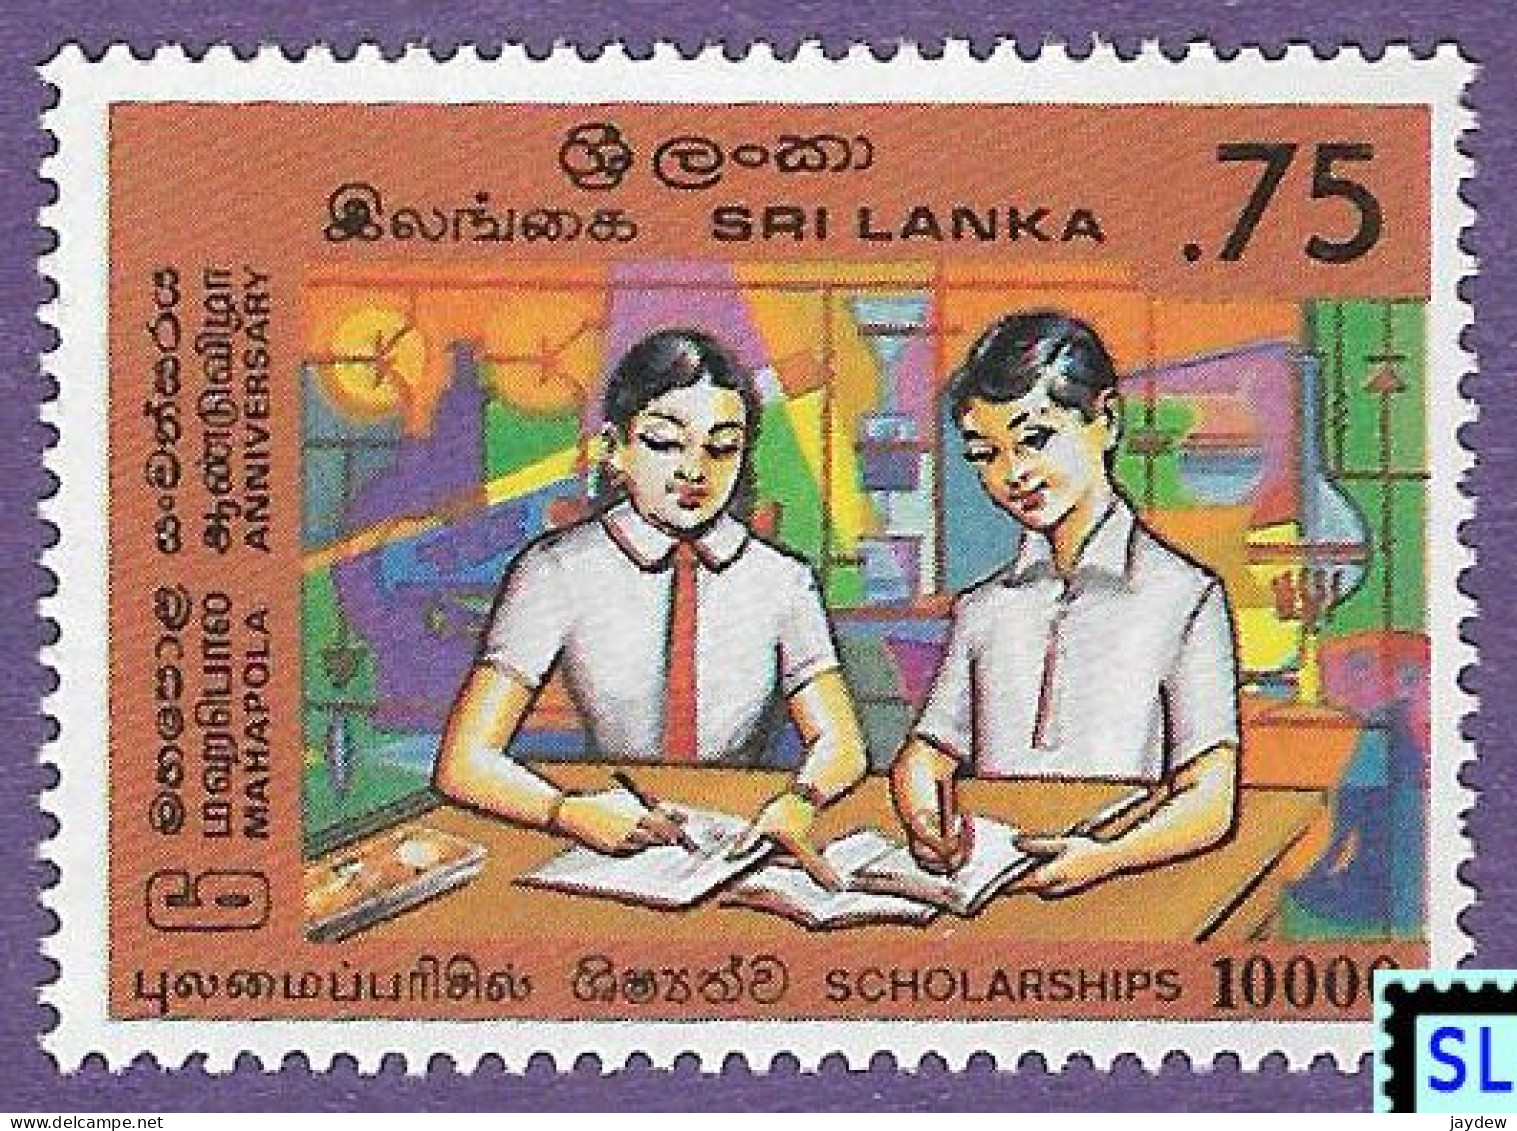 Sri Lanka Stamps 1986, Mahapola Scholarship, MNH - Sri Lanka (Ceylon) (1948-...)